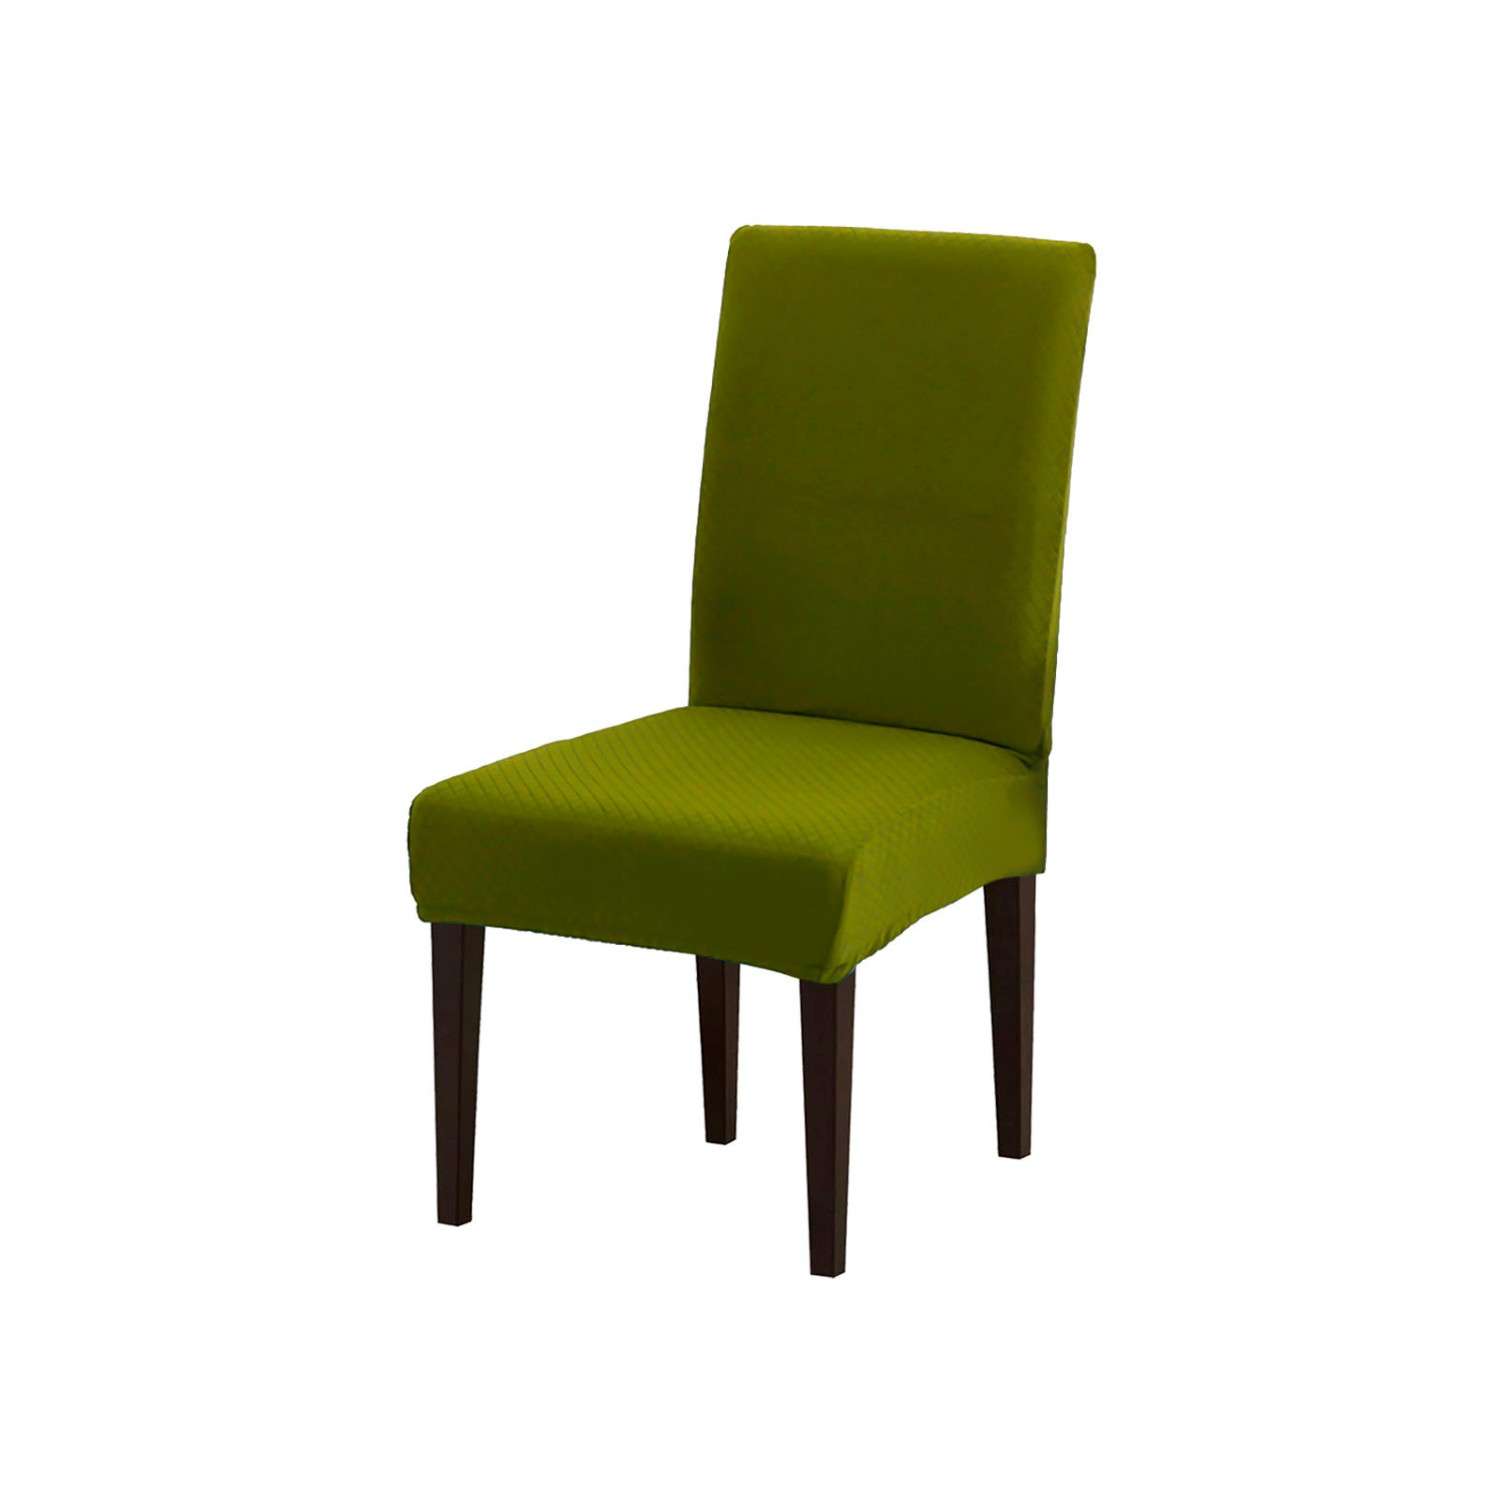 Чехол на стул LuxAlto Коллекция Quilting желто-зеленый - фото 1